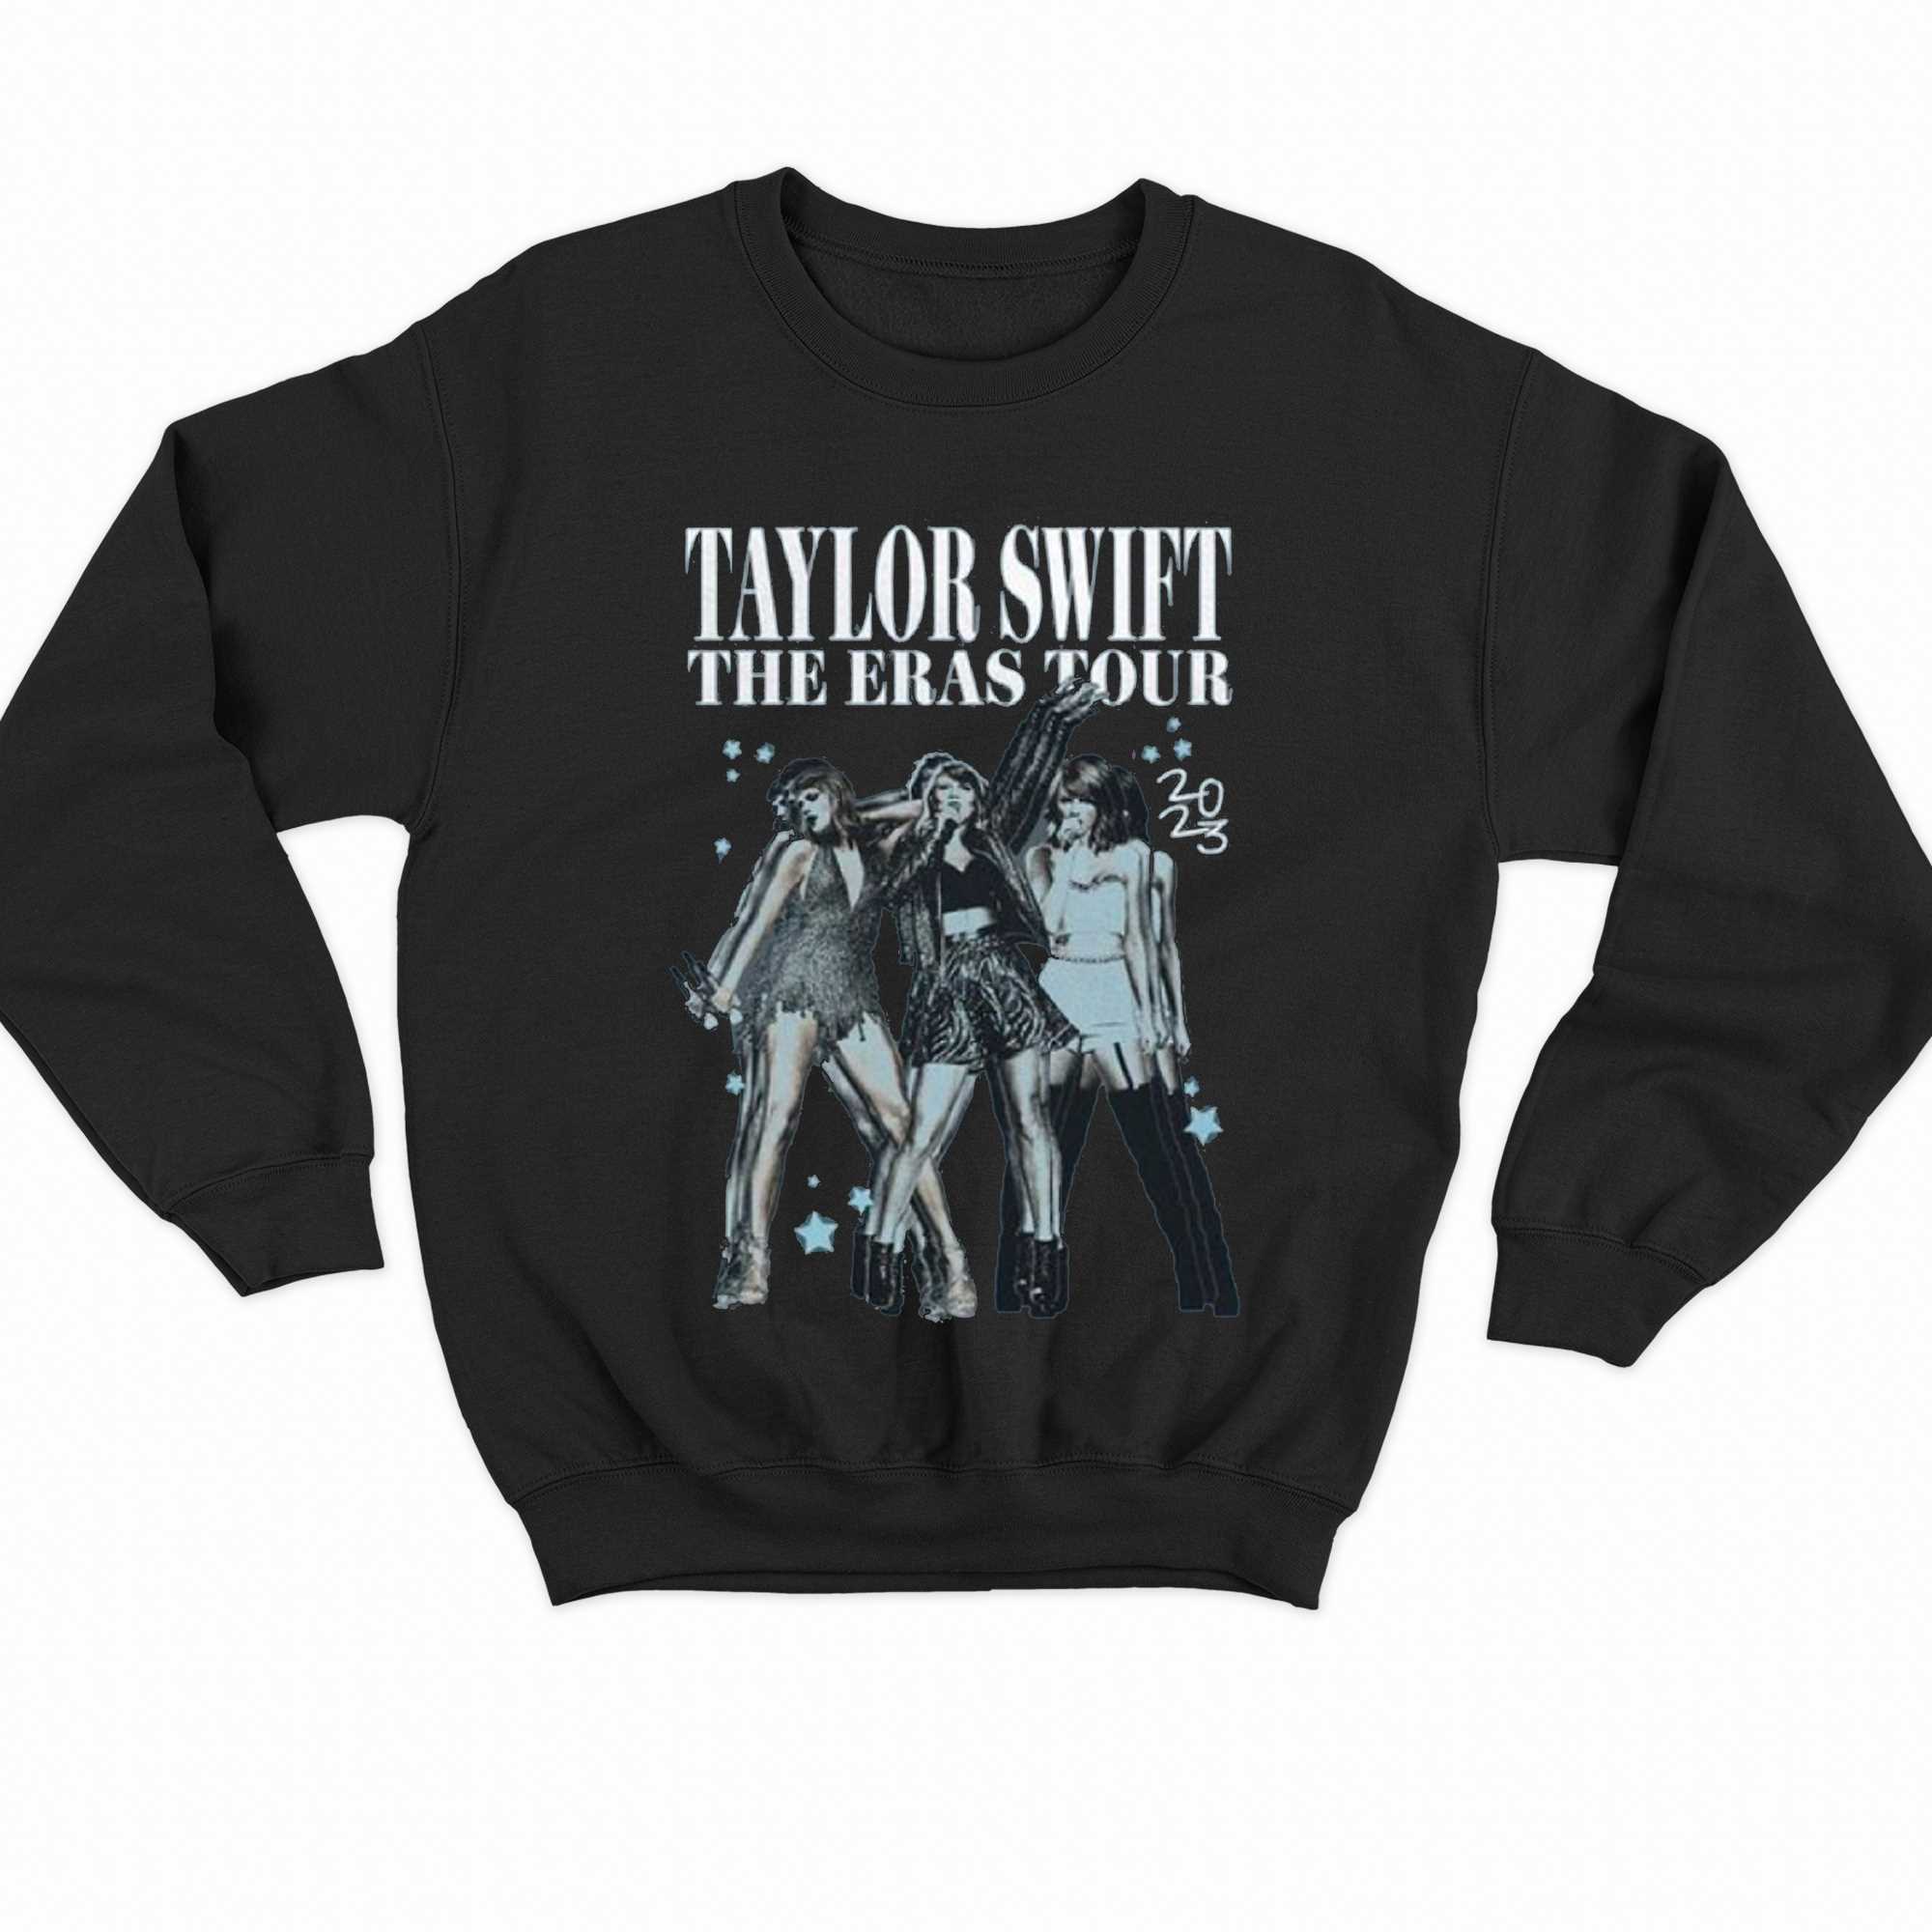 Taylors Swift The Eras Tour T-shirt 